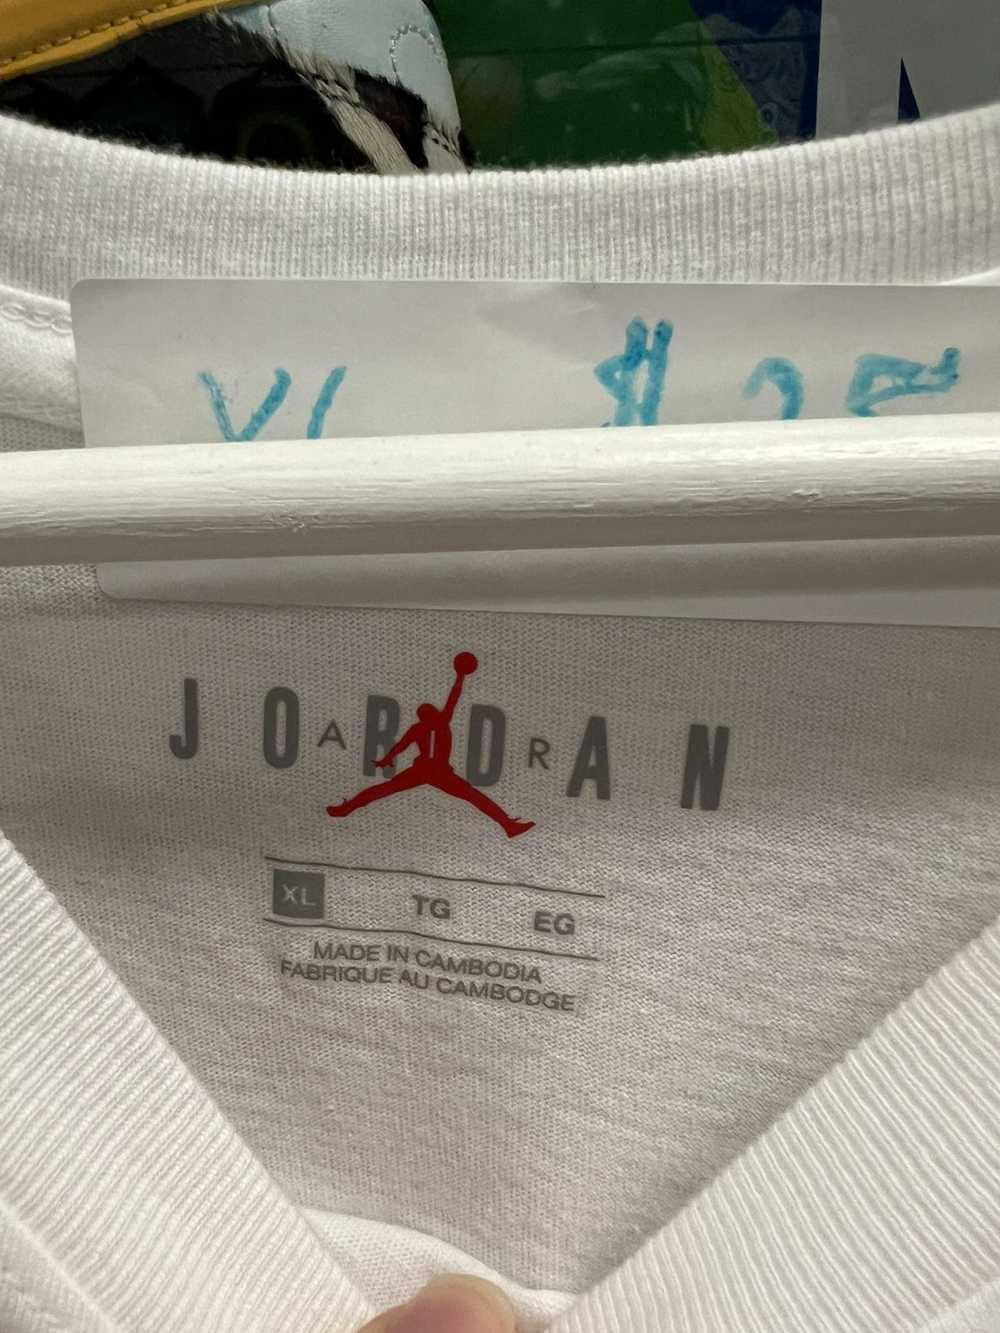 Jordan Brand Jordan Brand Tshirt - image 3